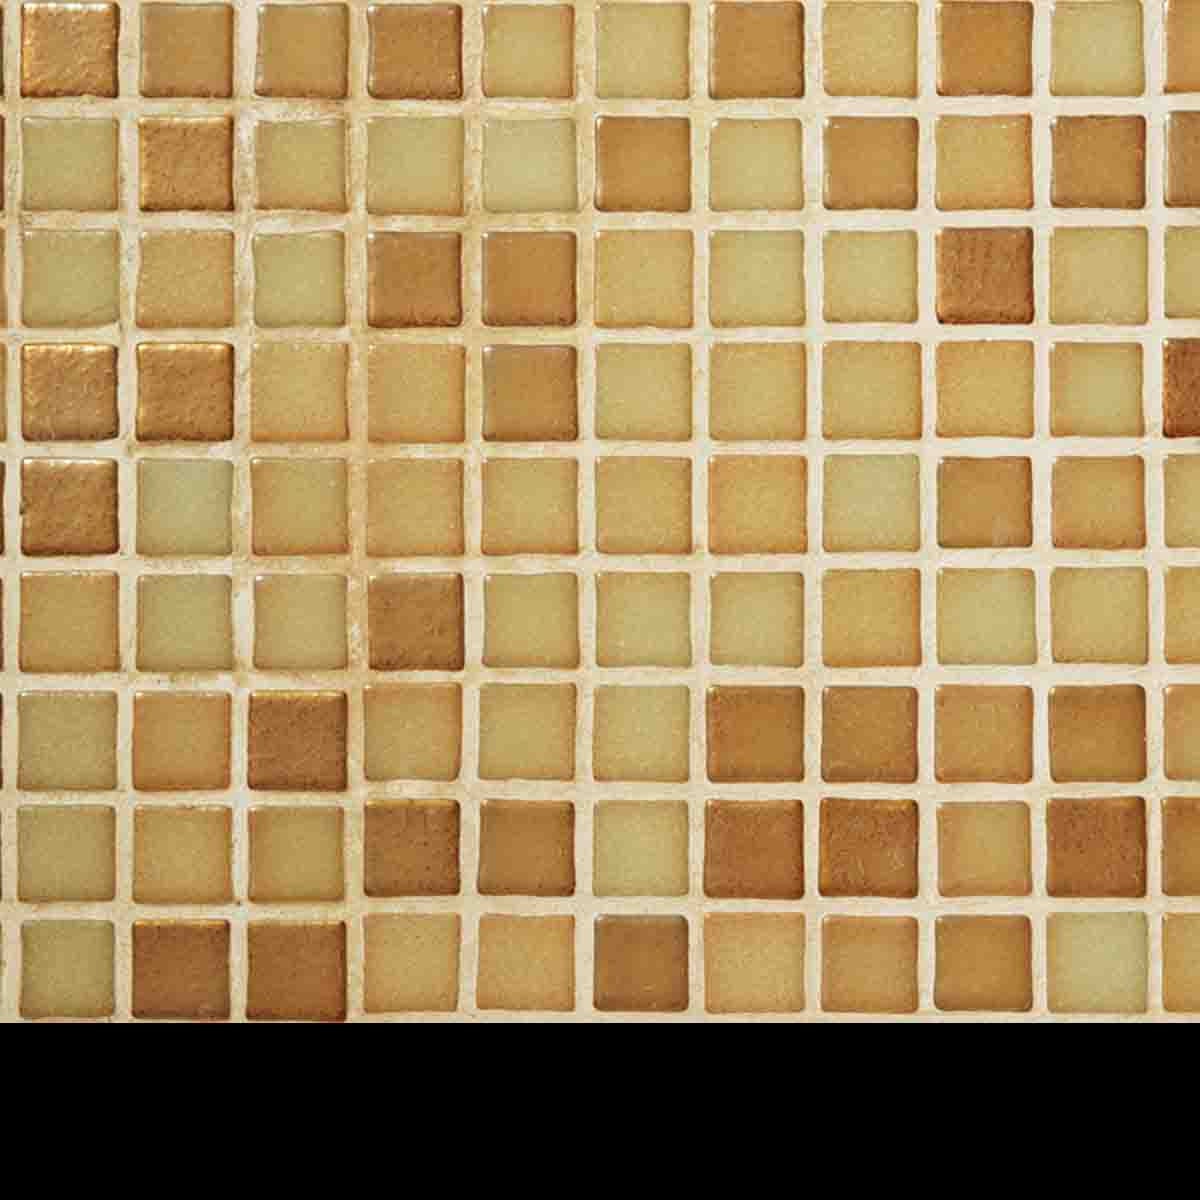 Brown and Tan Mosaic Tiles Background Wallpaper Bathroom Mural